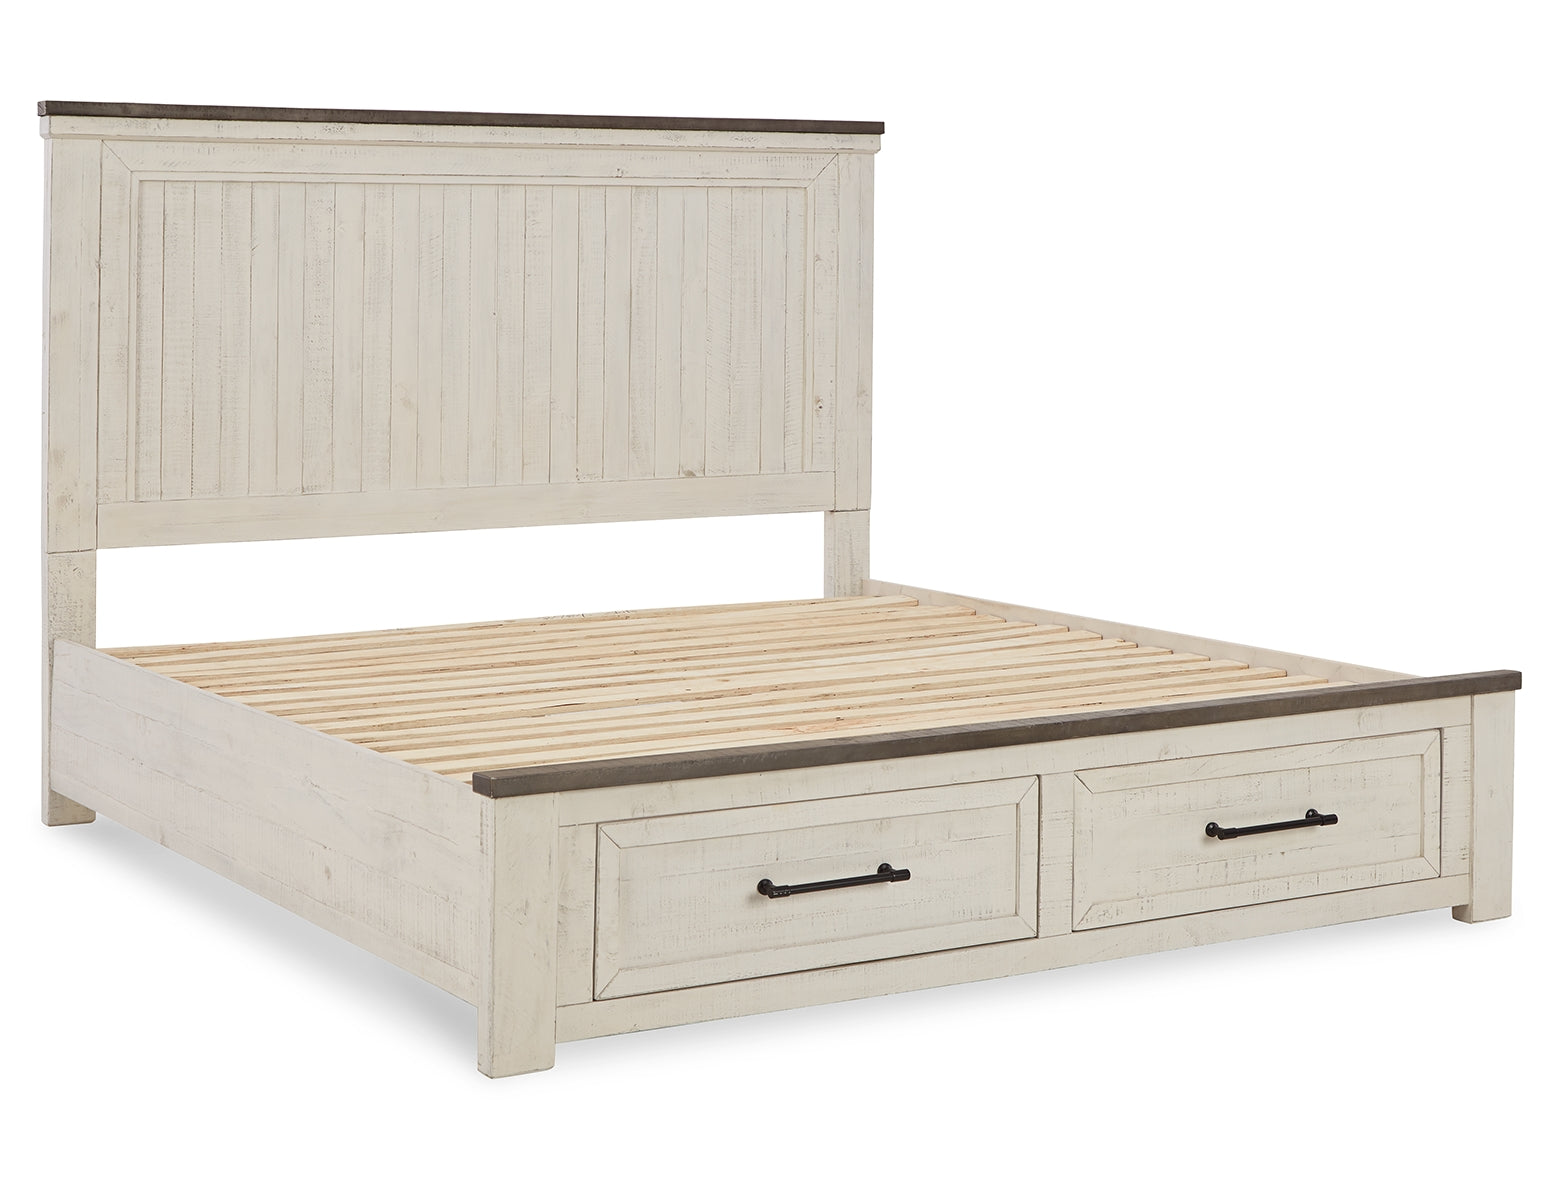 Brewgan Queen Panel Storage Bed with Dresser